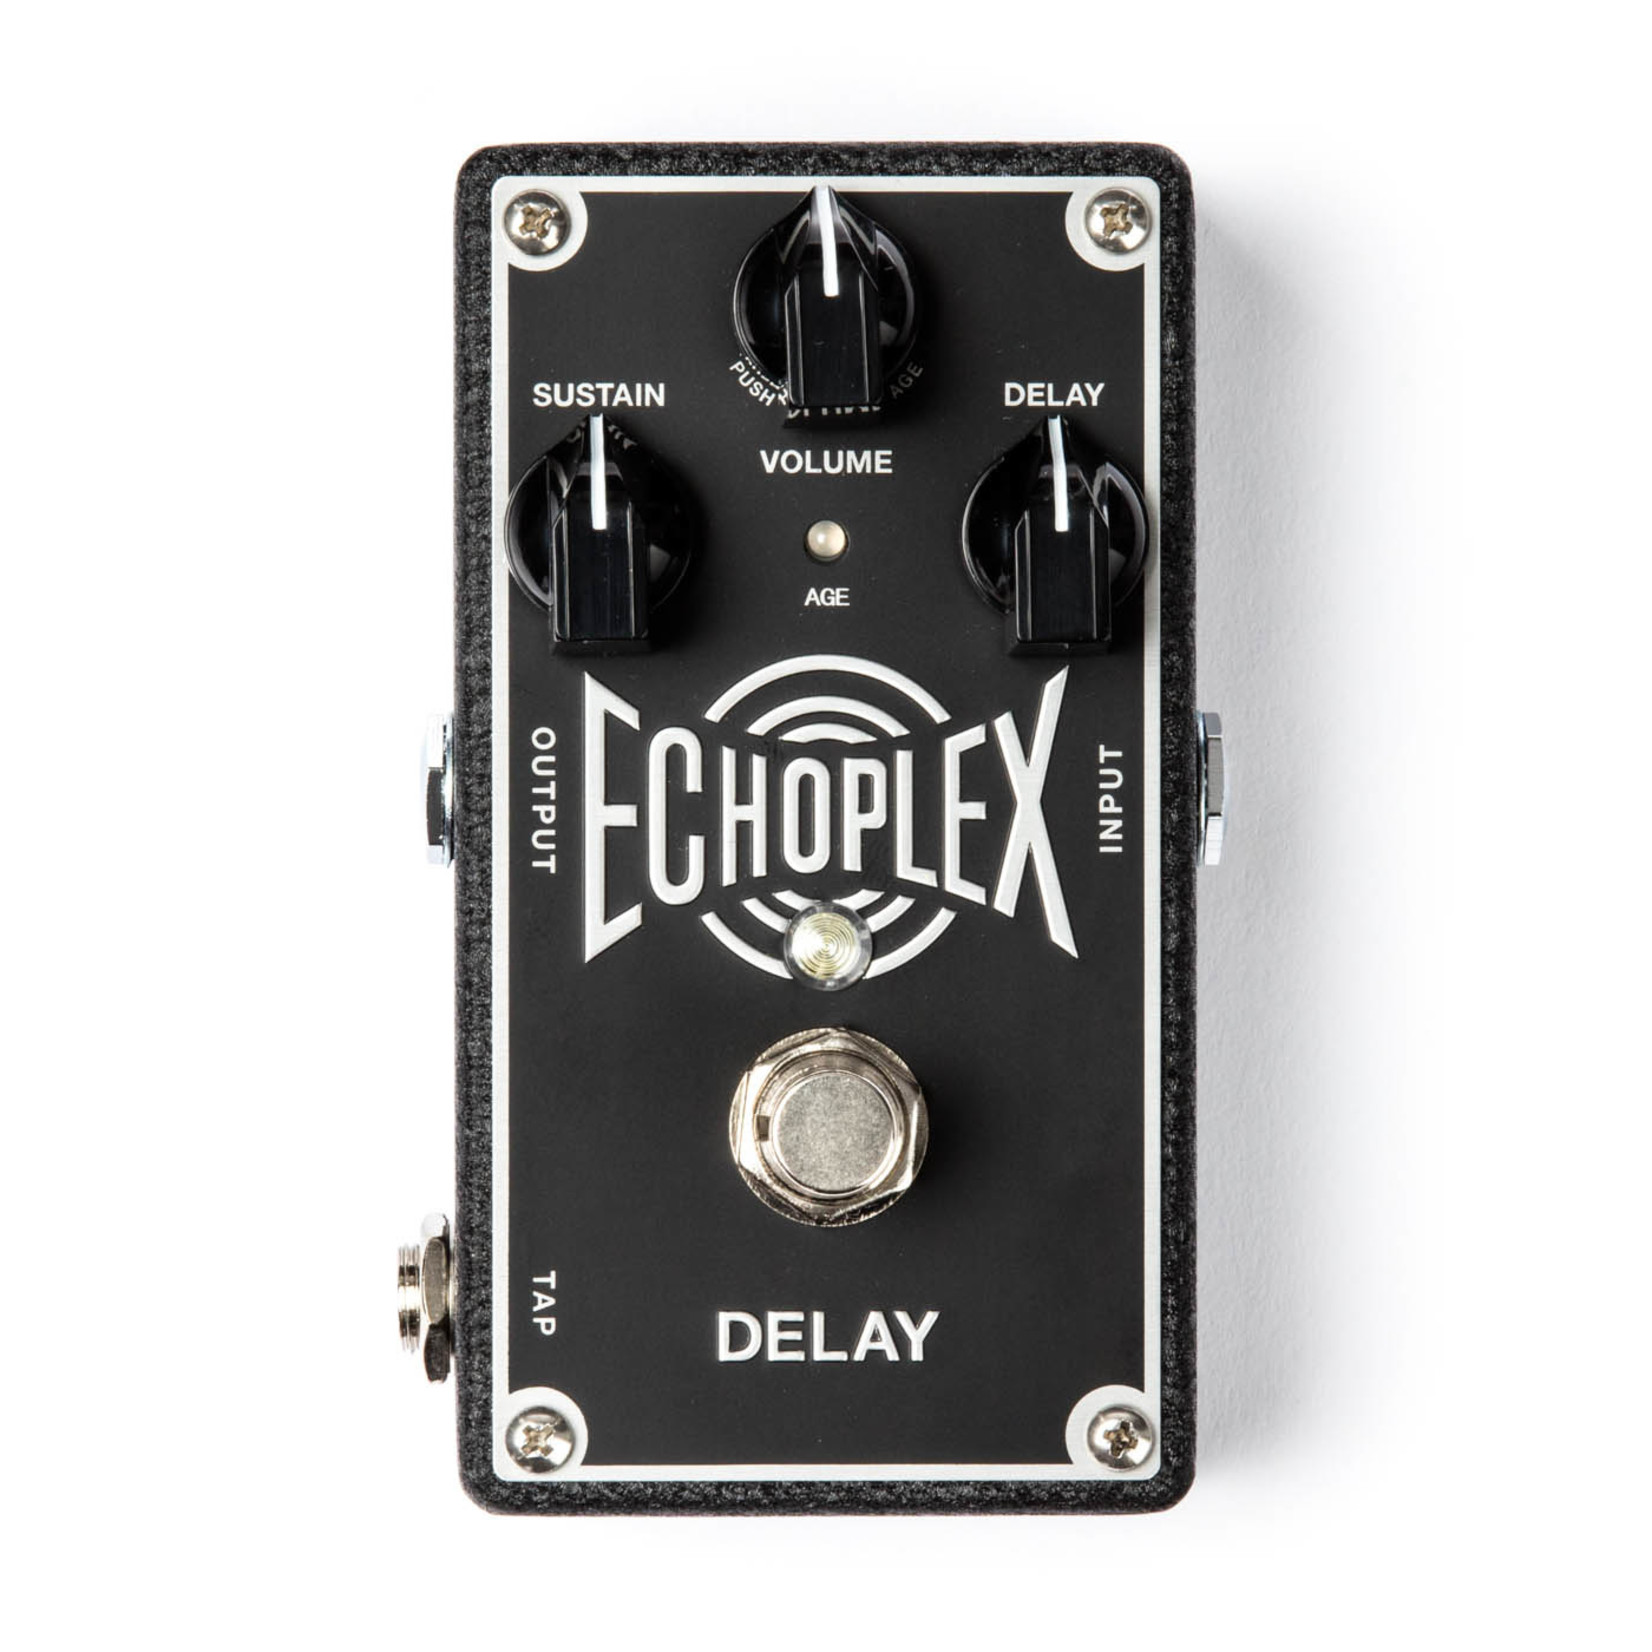 Dunlop Dunlop Echoplex Delay - EP103